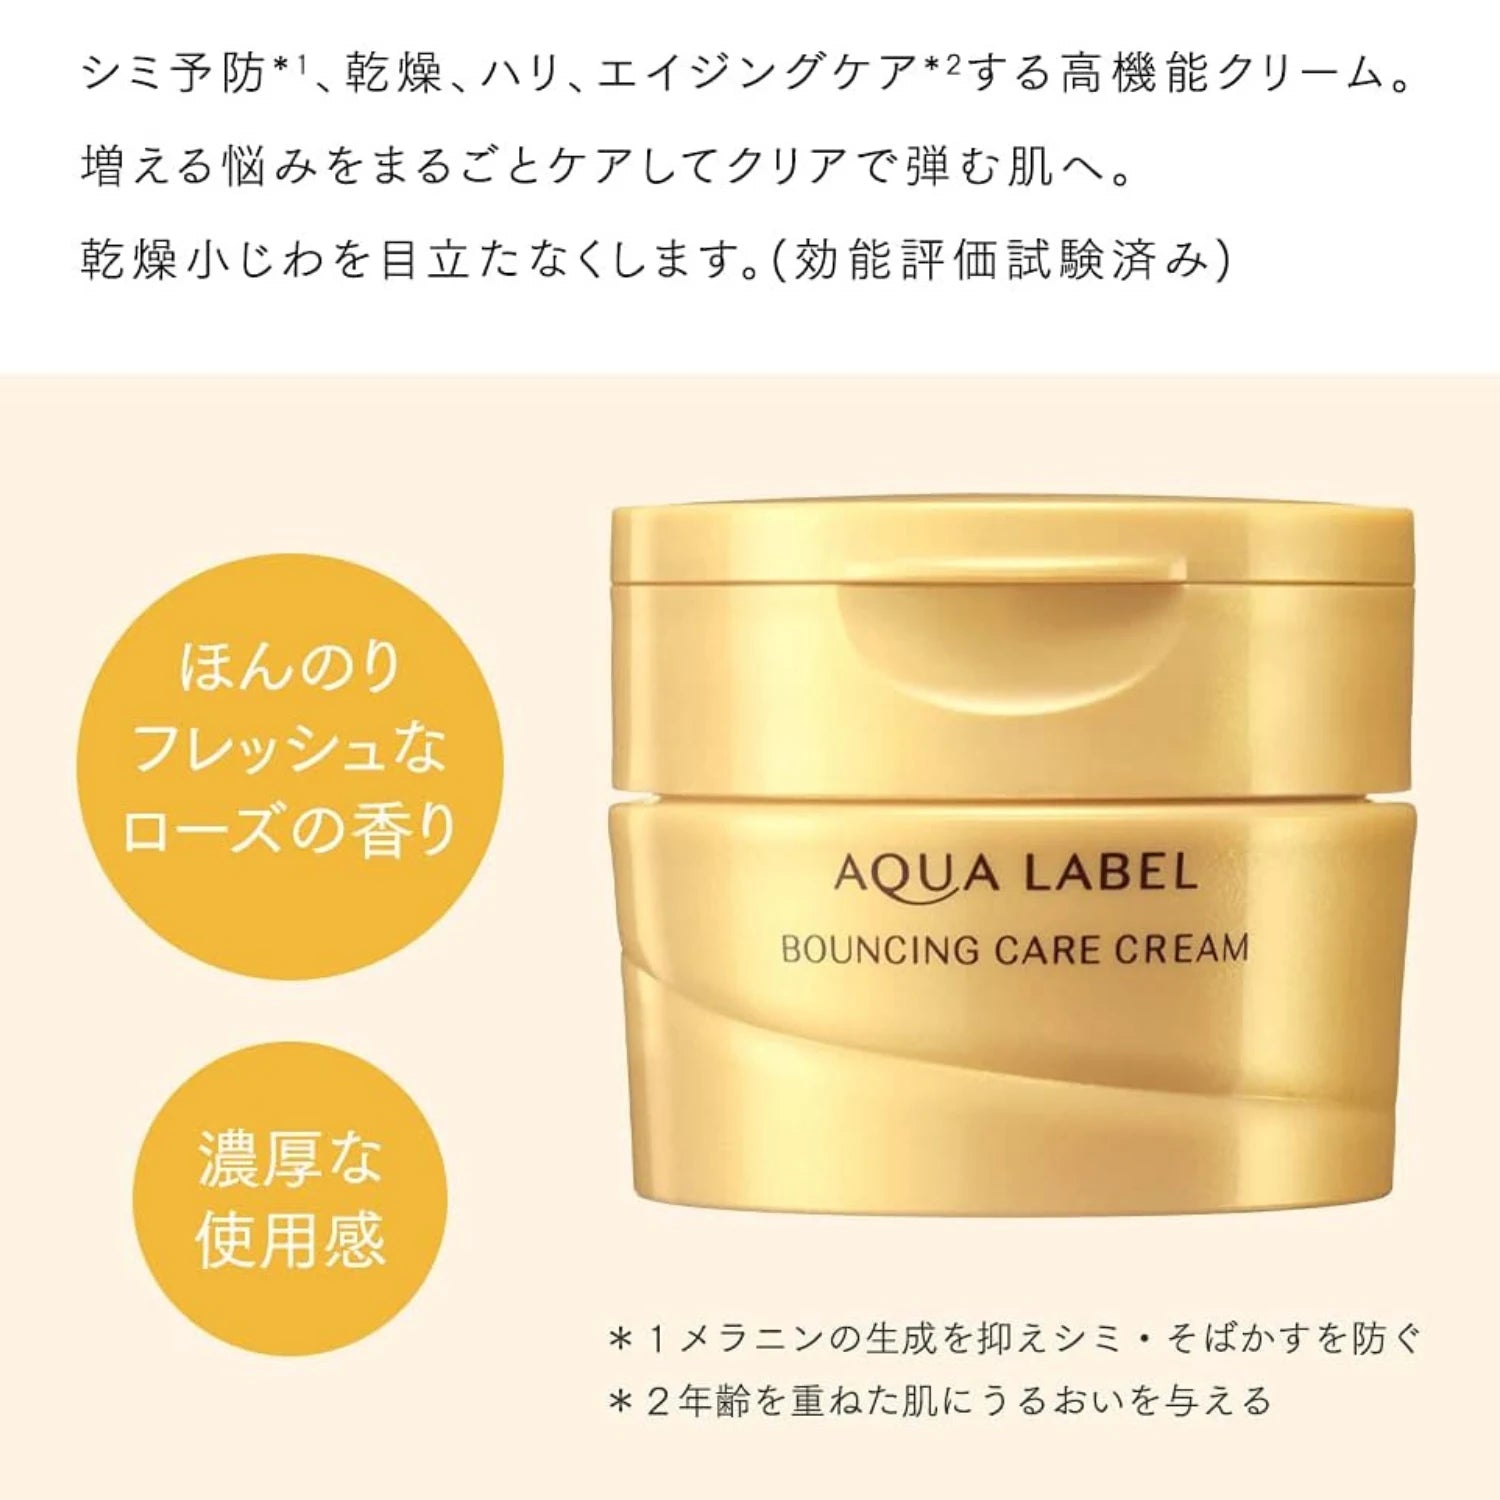 Shiseido AQUALABEL Bouncing Care Cream 50g - Buy Me Japan